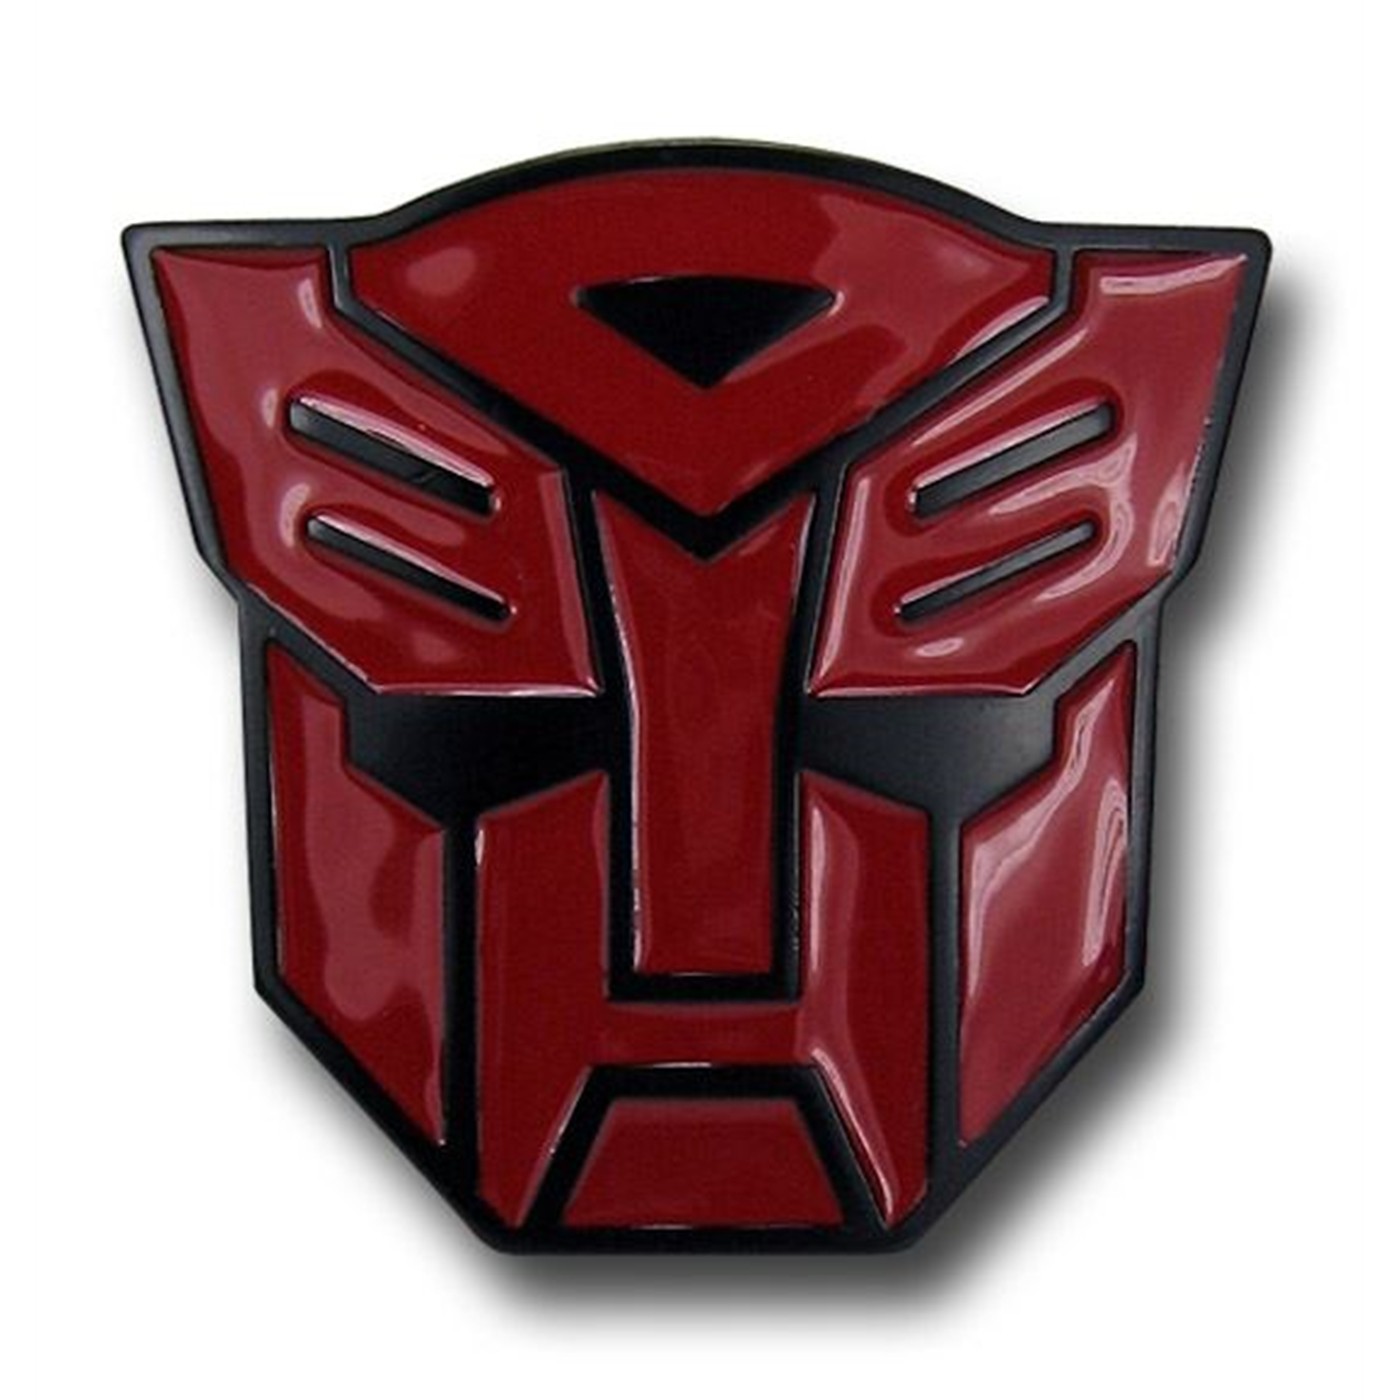 Transformers Autobot Red Symbol Belt Buckle